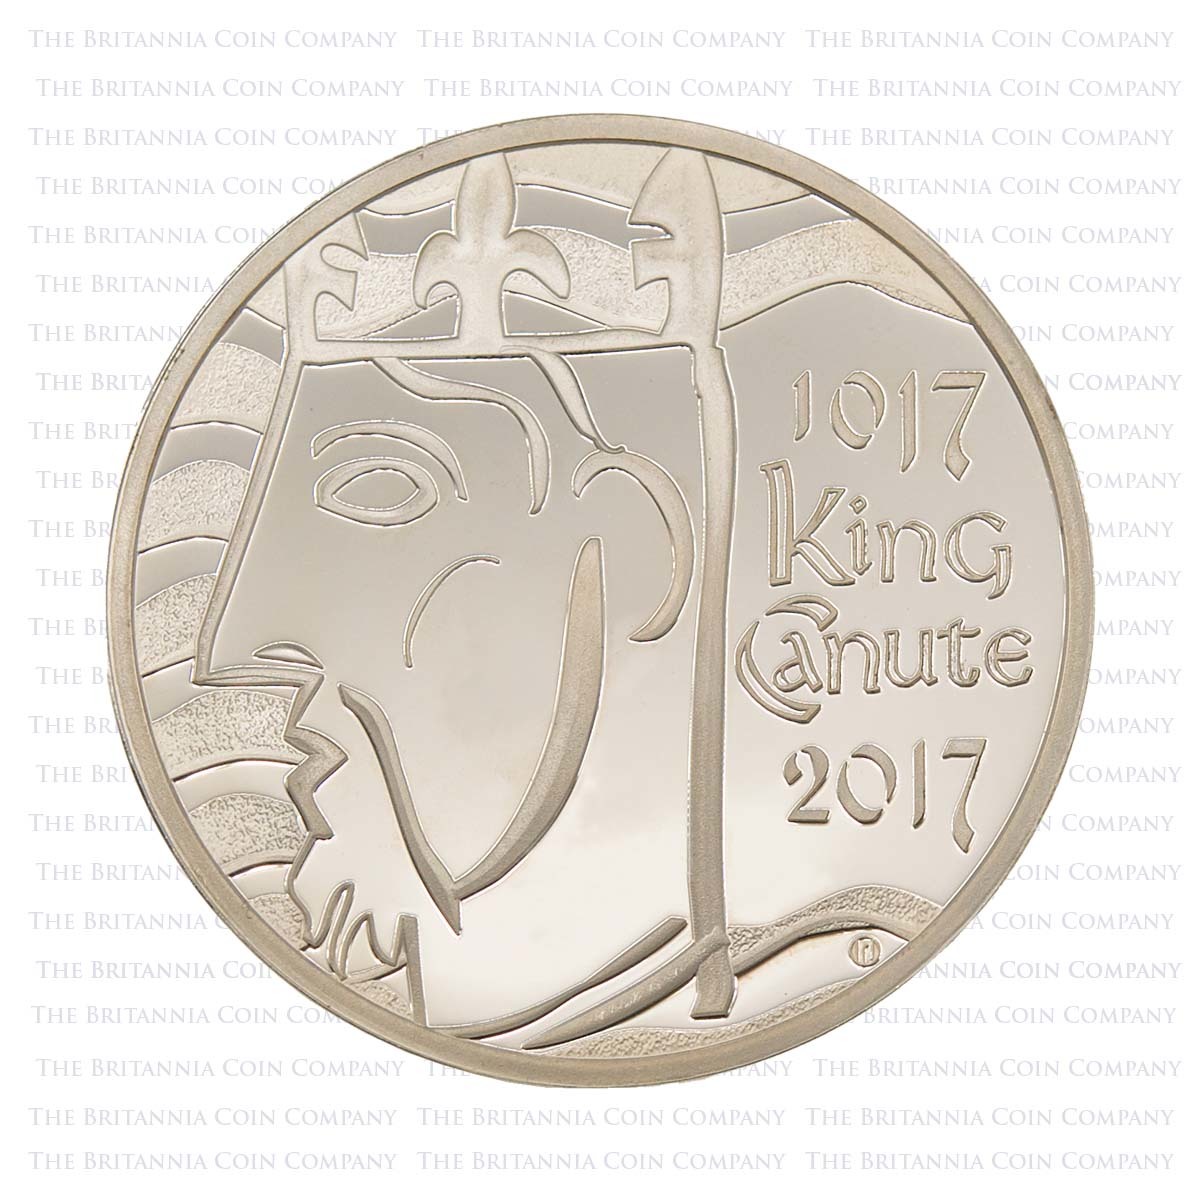 UK17KCSP 2017 King Canute Coronation 1017 £5 Crown Silver Proof Reverse.